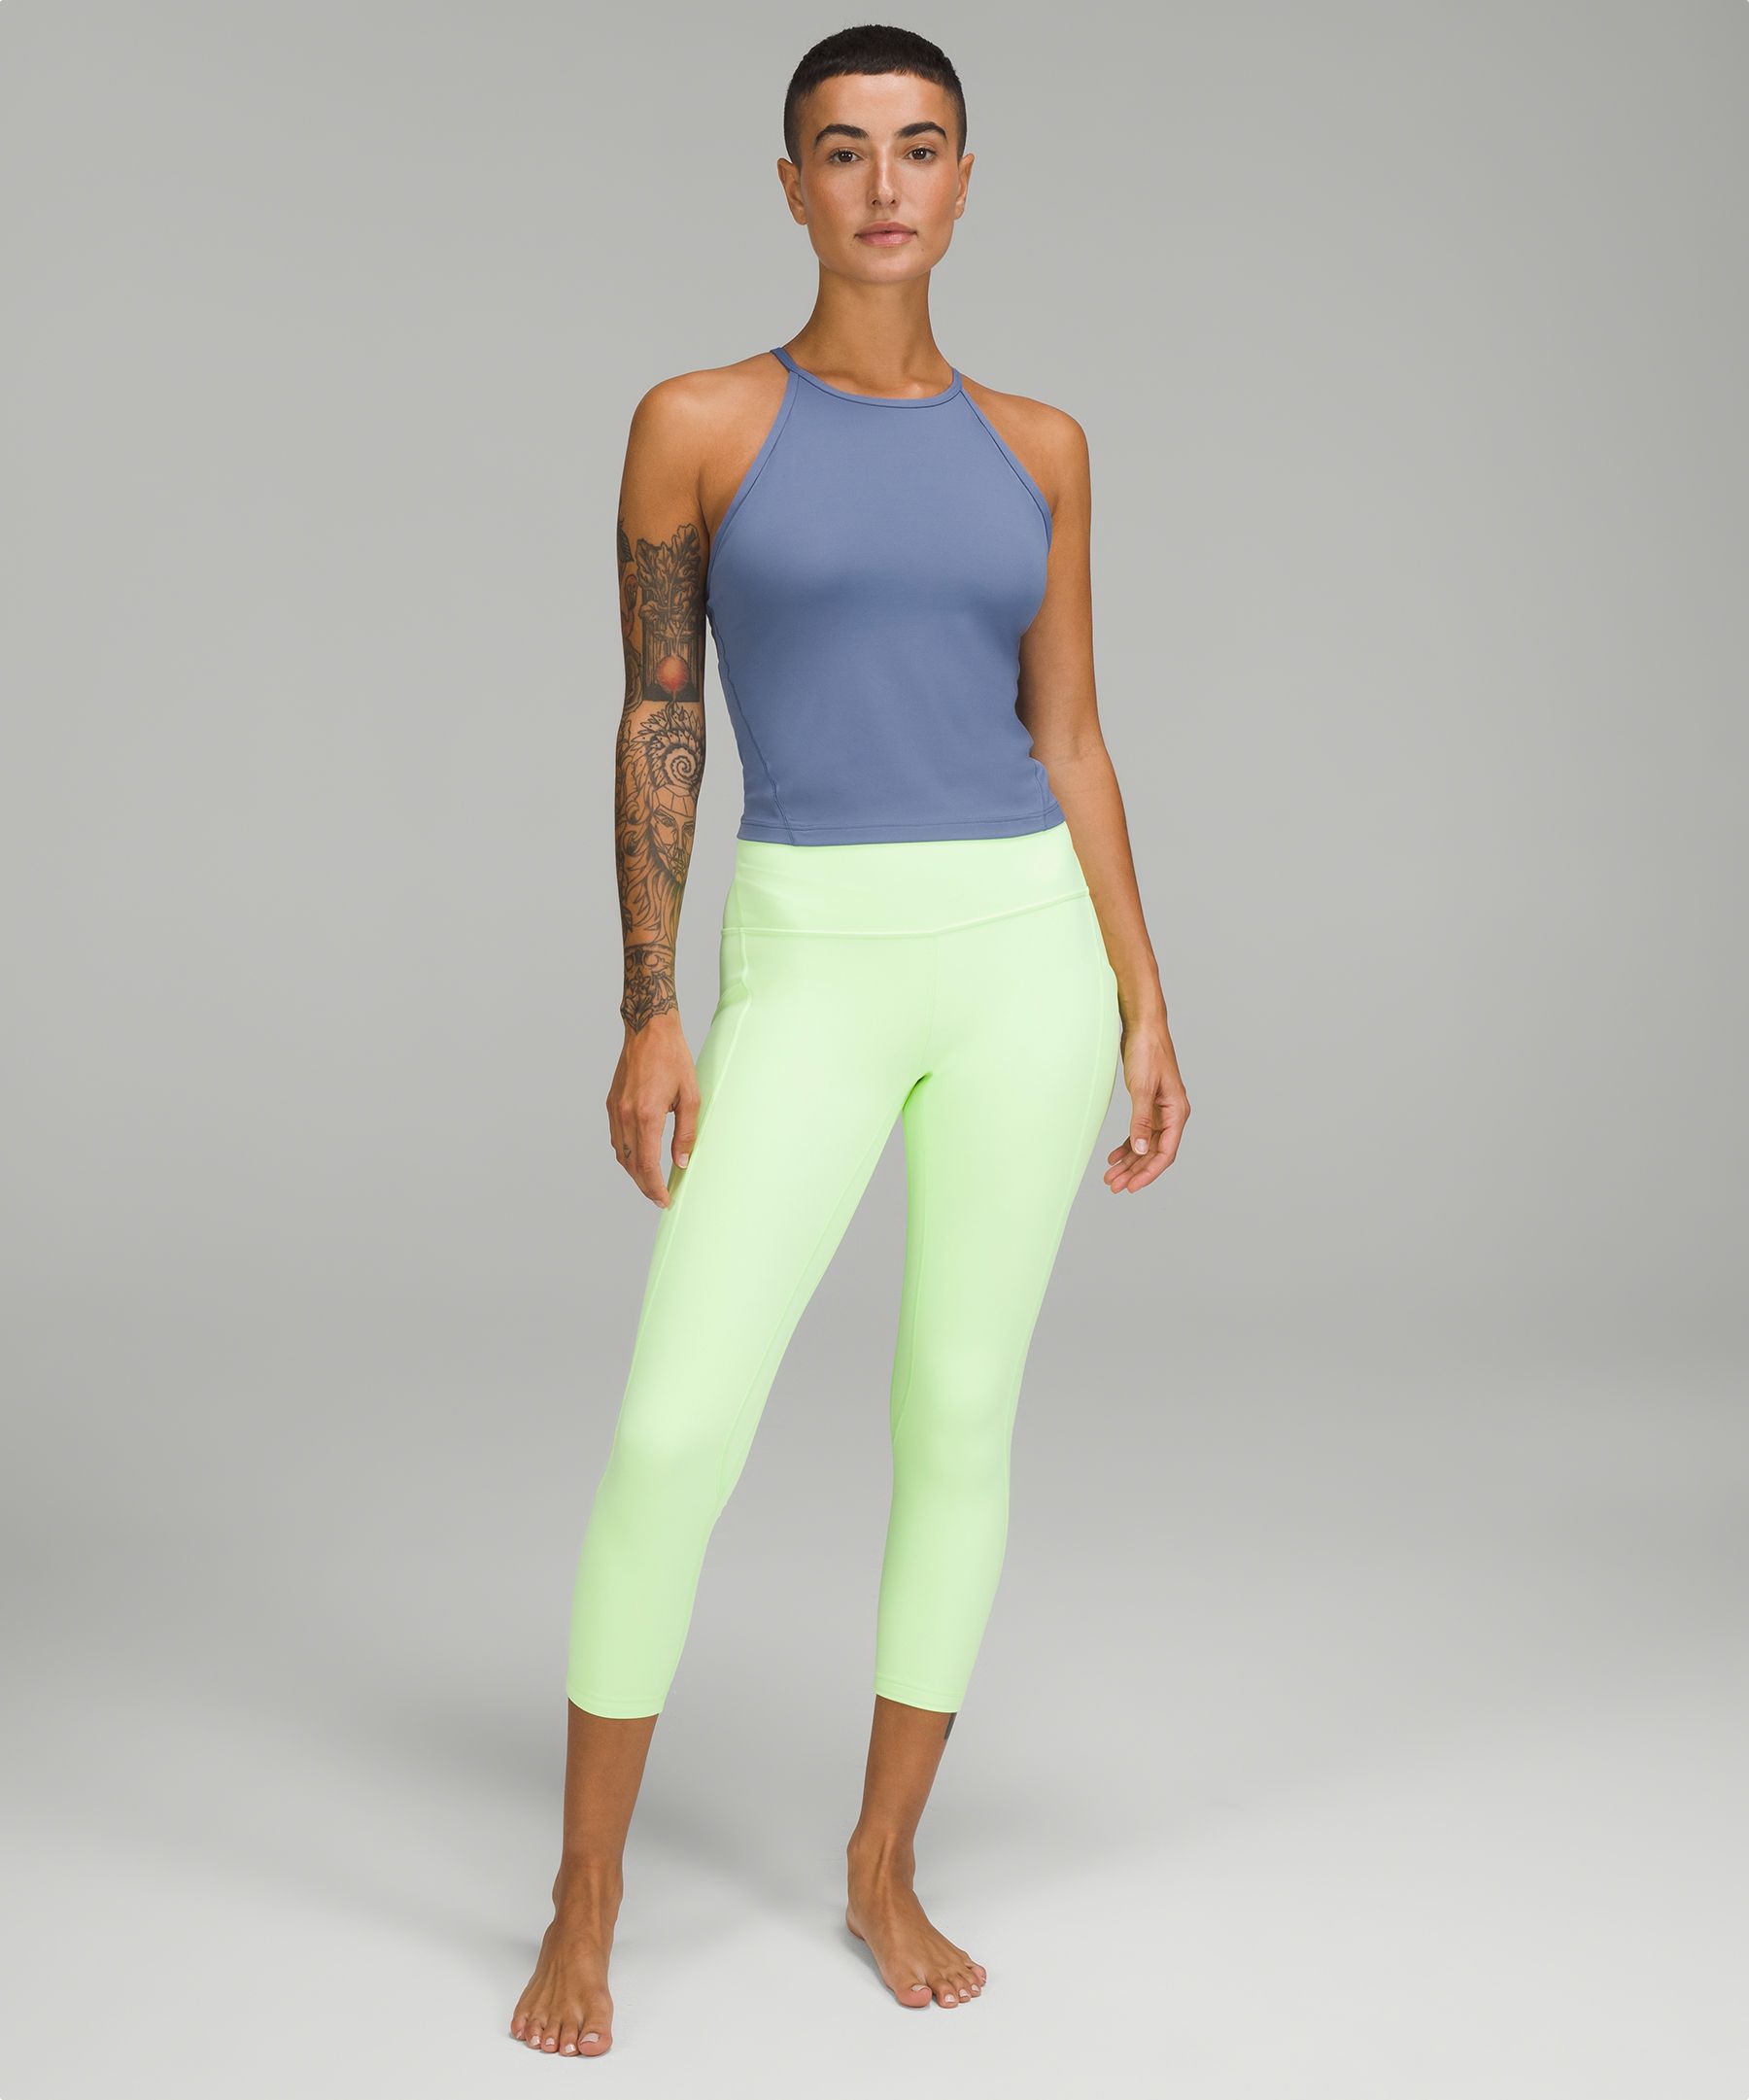 Lululemon Strappy yoga tank/bra top, Women's Fashion, Activewear